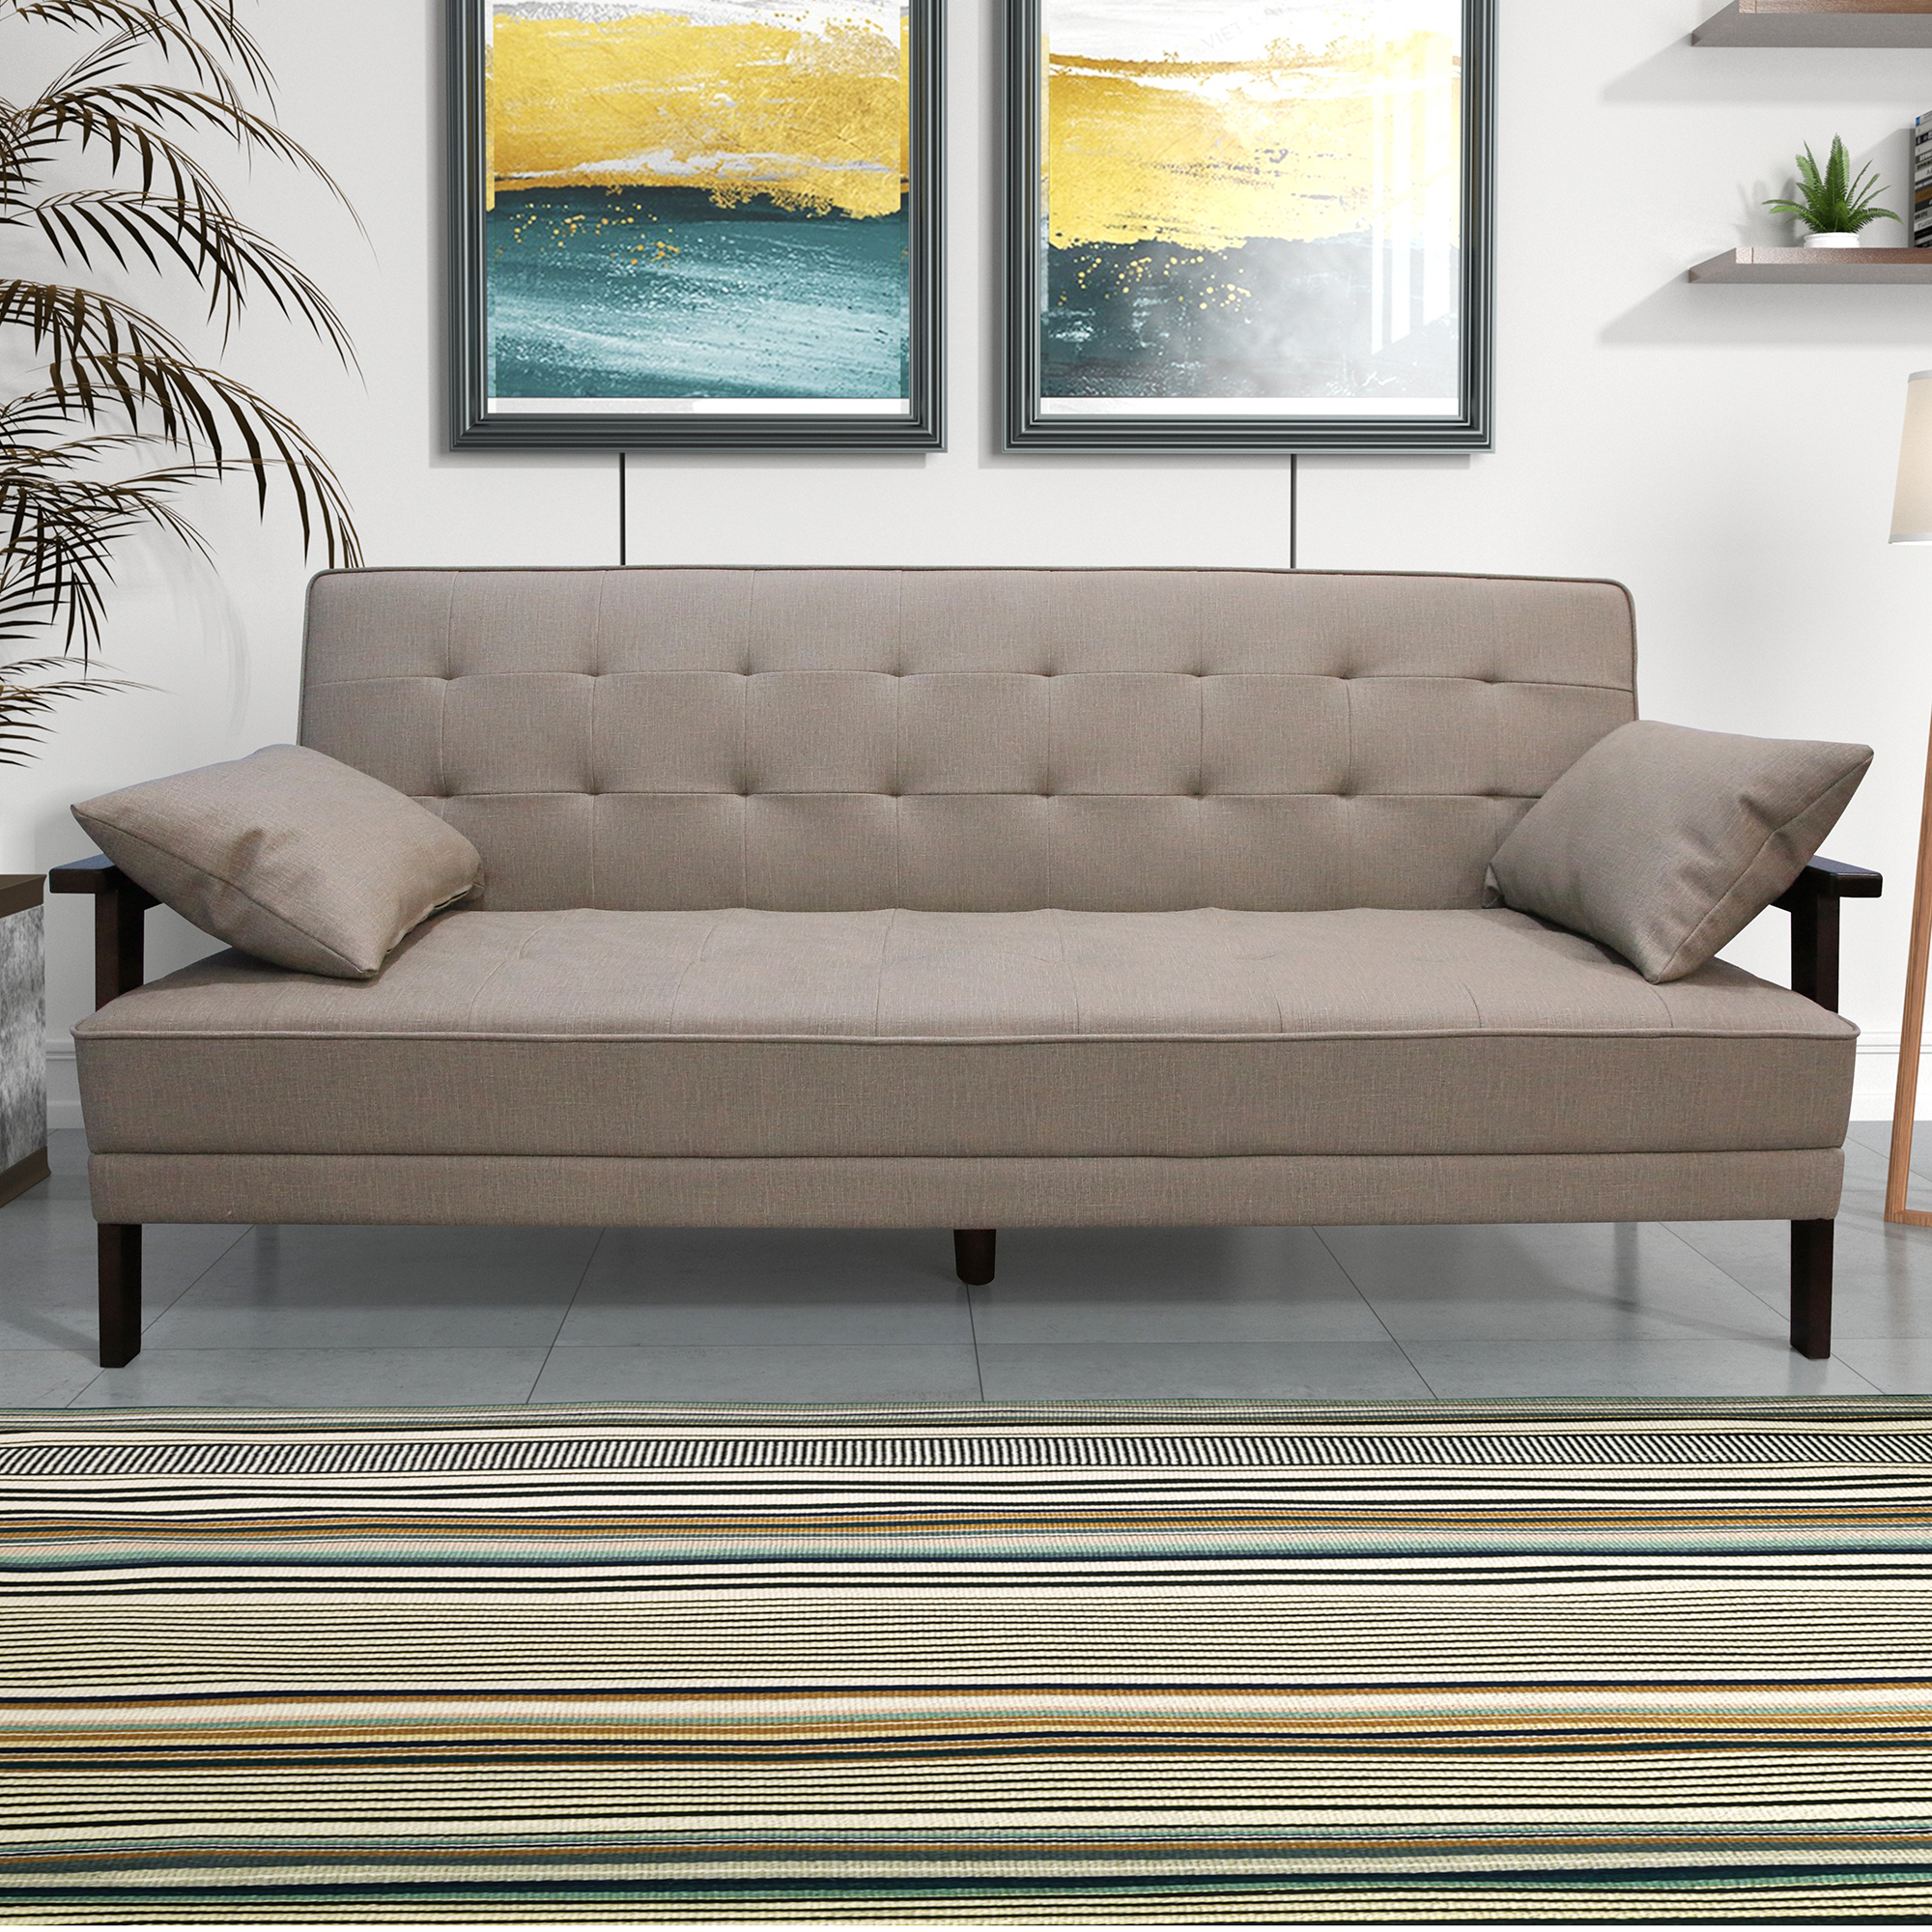 Natural fiber casting leather futon sofa bed with wood armrest-CASAINC